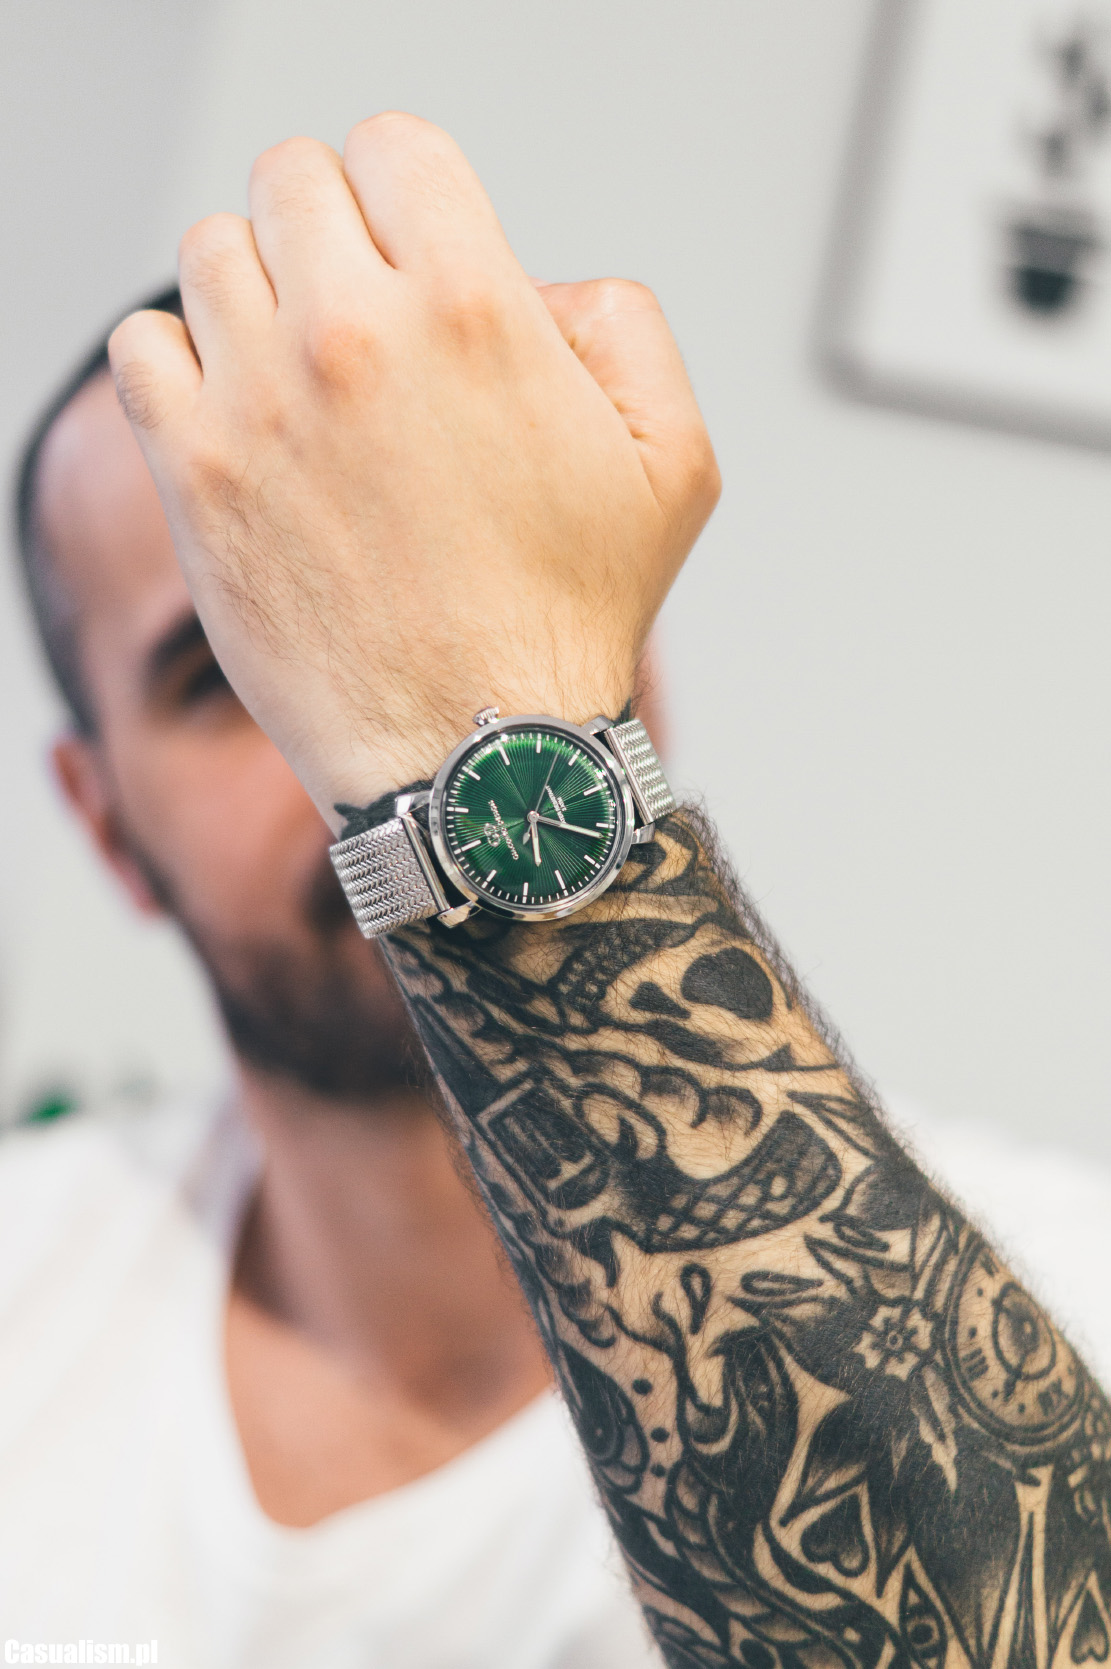 zegarek giacomo design, giacomo design, zegarek męski zielony, zielona tarcza zegarka, zegarek retro, retro zegarek dla faceta, bransoletka mesh, vans oldskool